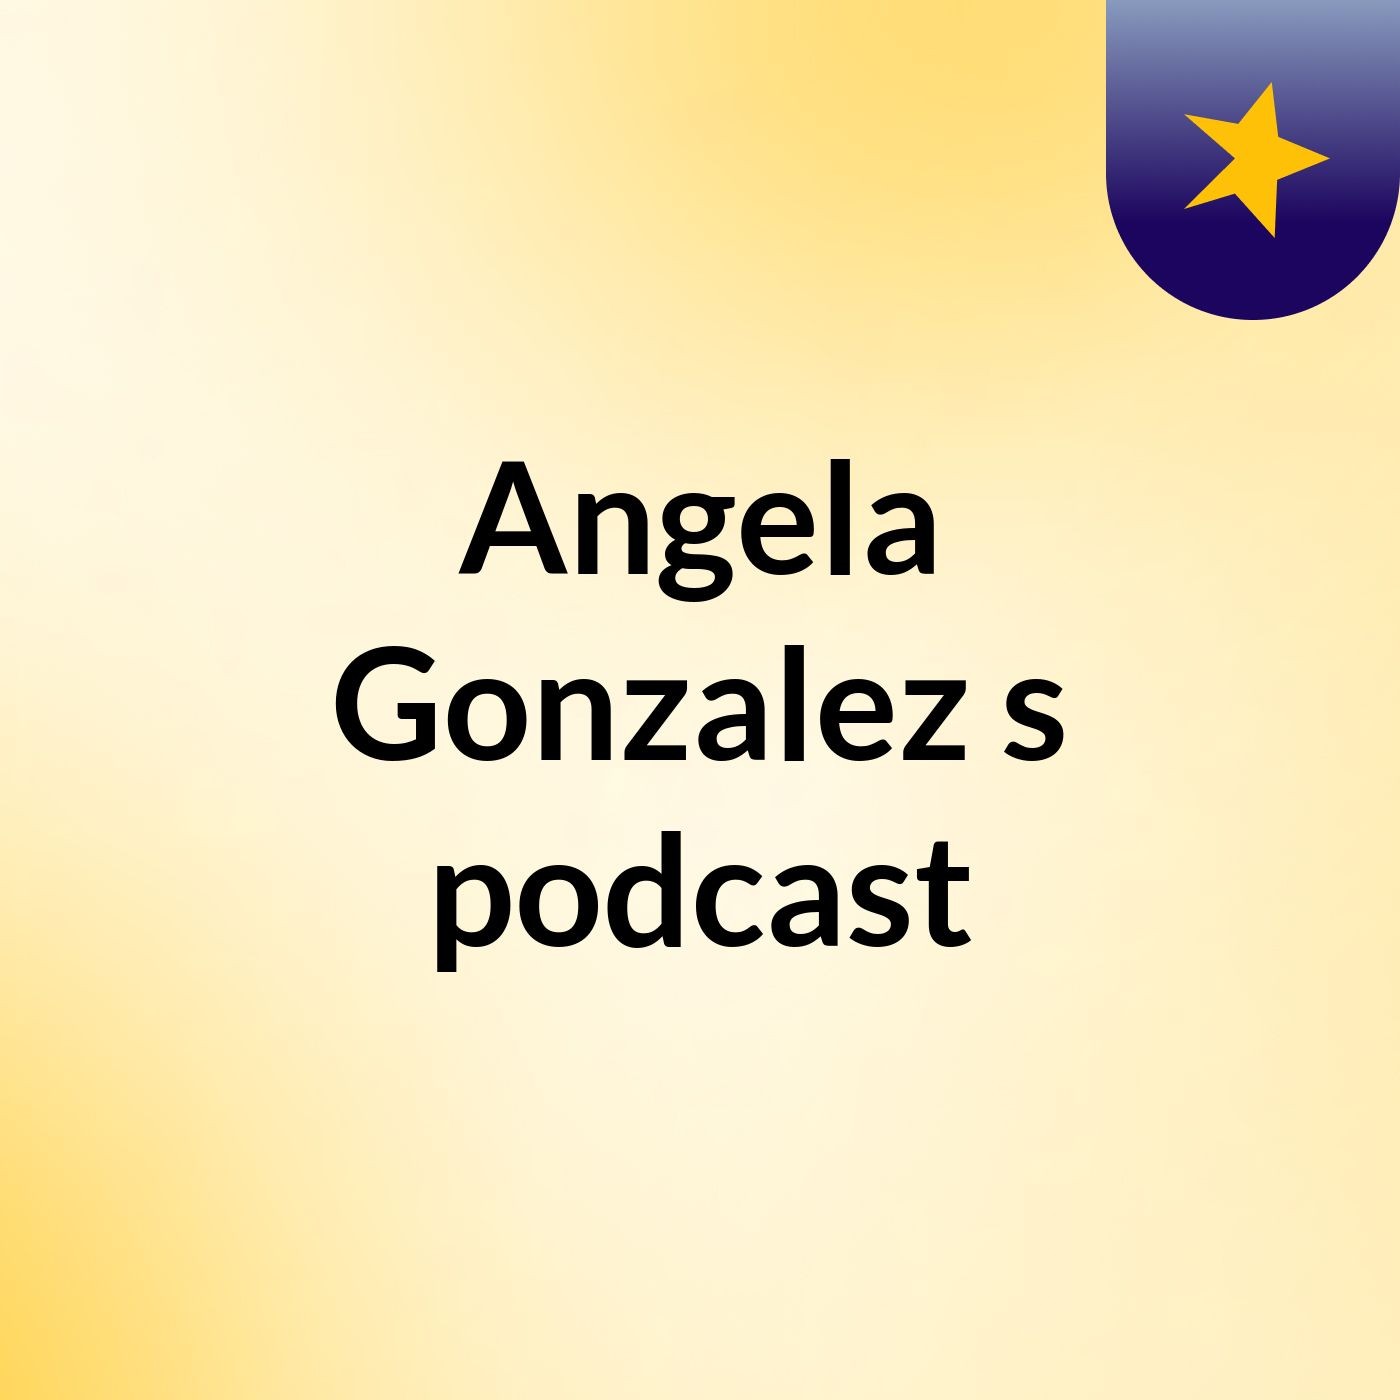 Episode 4 - Angela Gonzalez's podcast